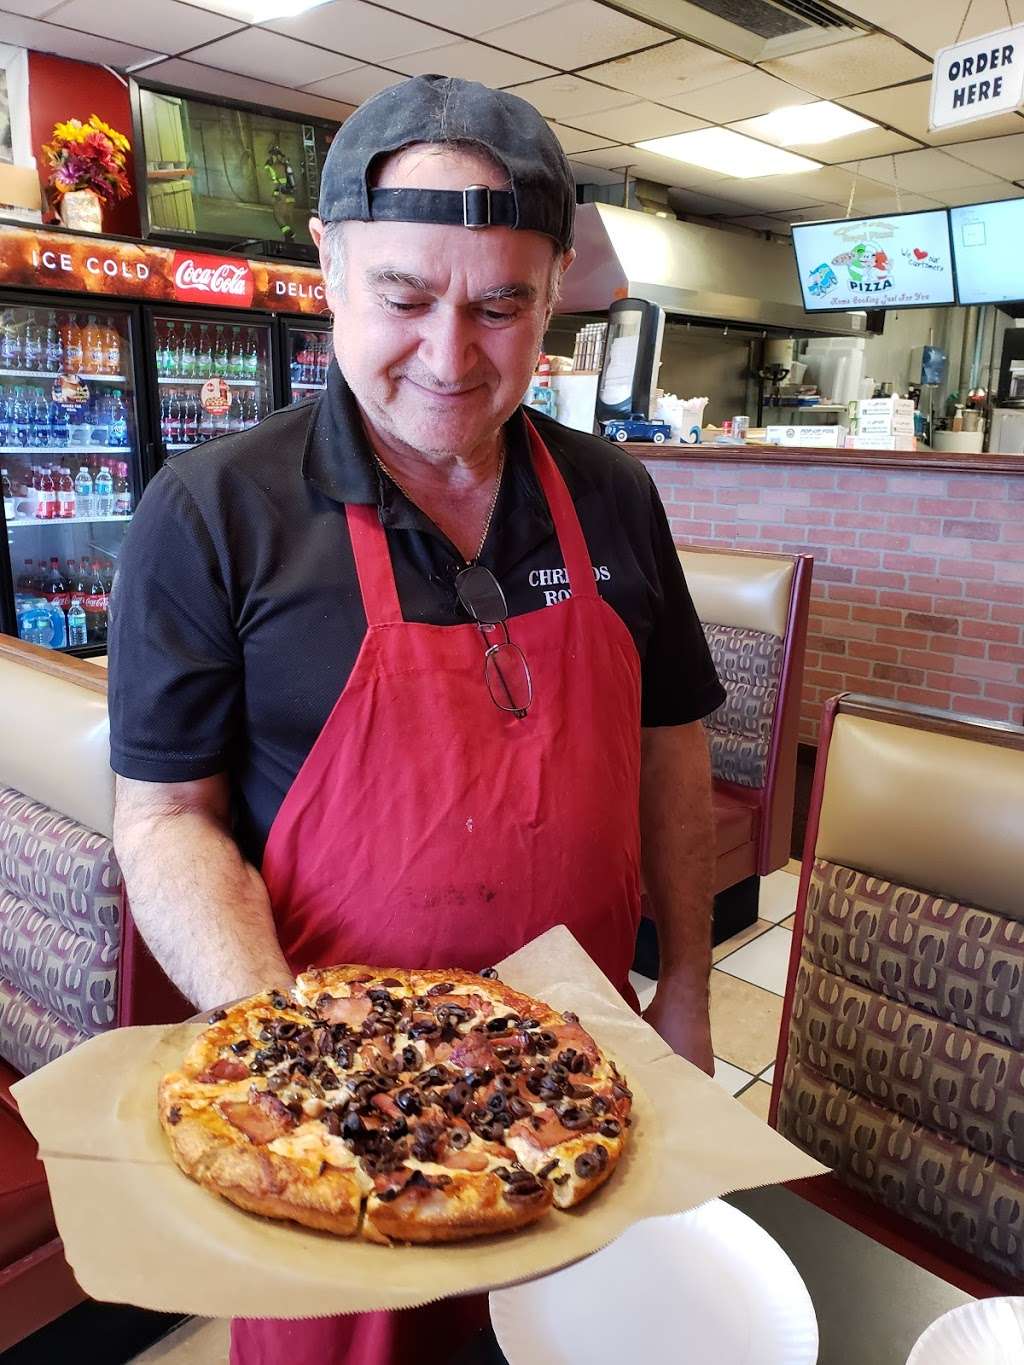 Christos Royal Pizza | 68 Main St, Lakeville, MA 02347, USA | Phone: (508) 947-6650